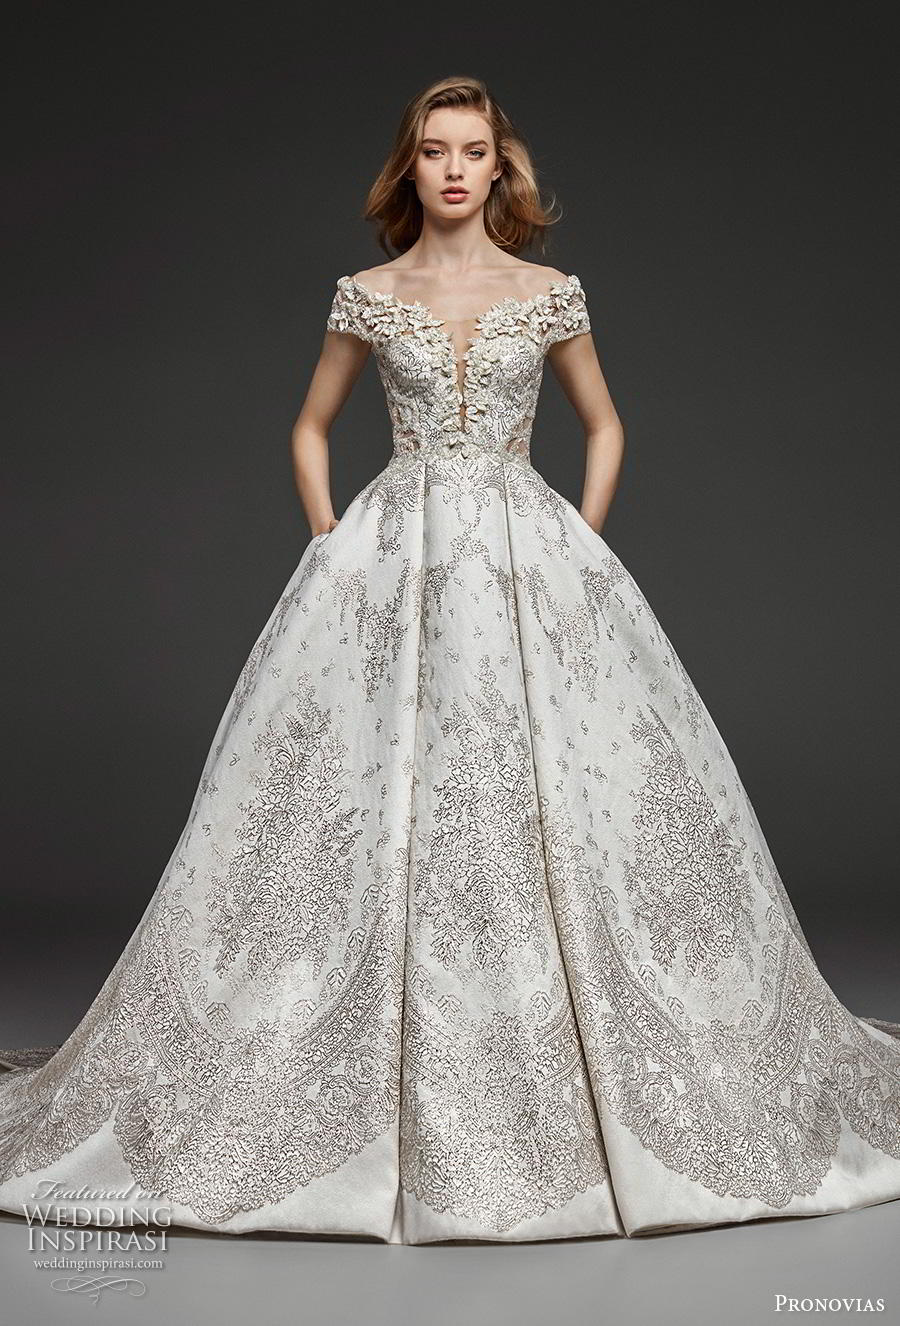 Atelier Pronovias Wedding Dress, Dresses Bridal